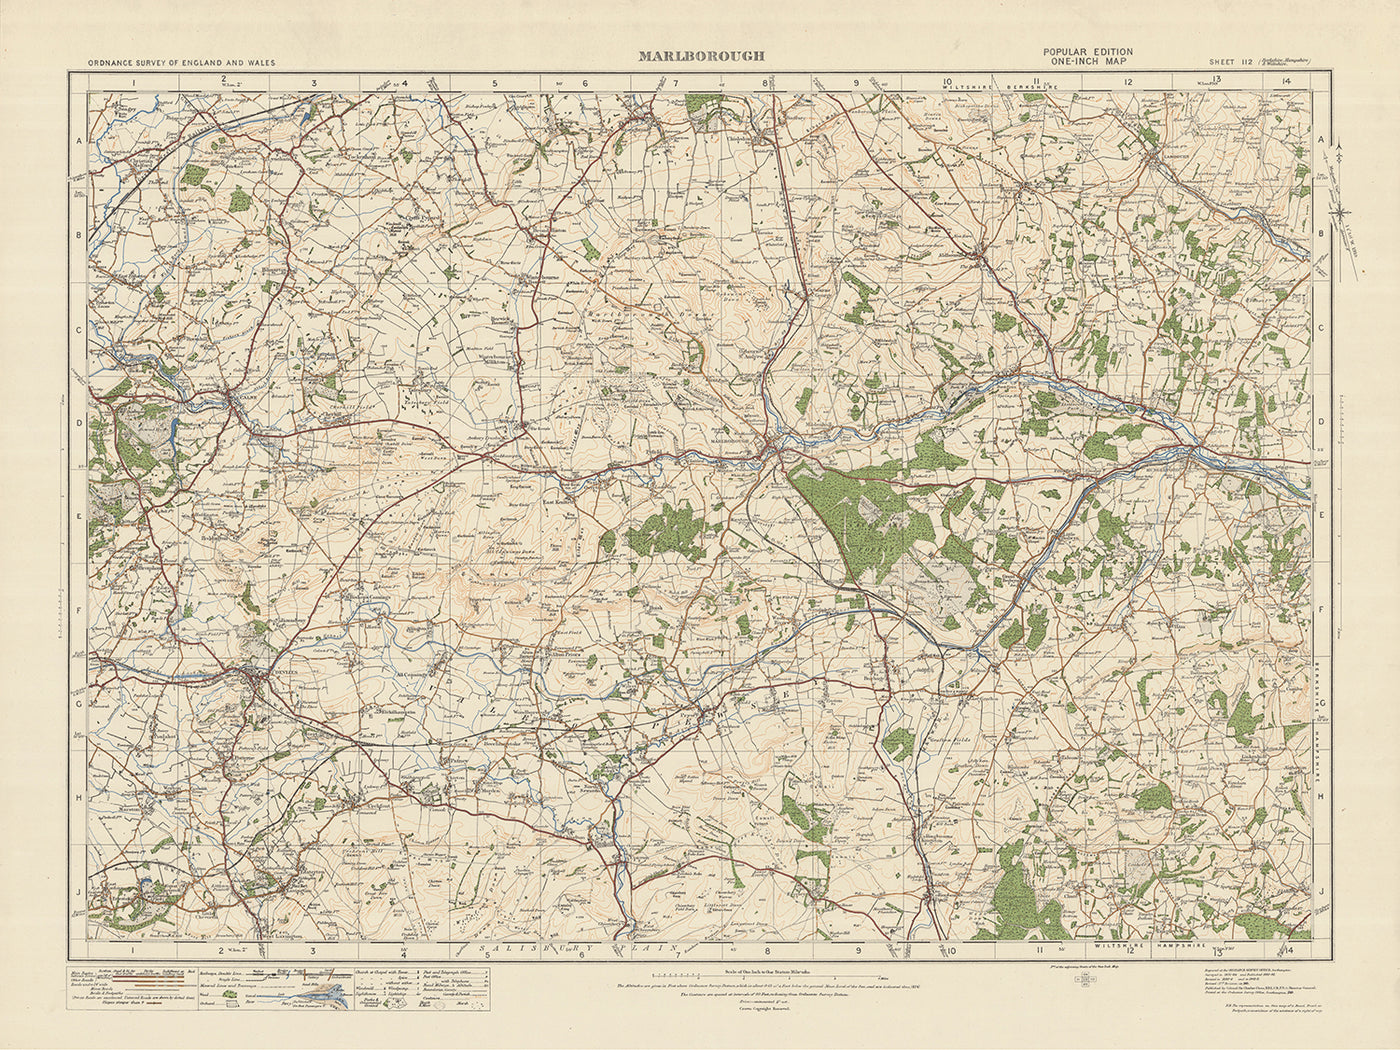 Old Ordnance Survey Map, Blatt 112 – Marlborough, 1925: Calne, Devizes, Hungerford, Lambourn, North Wessex Downs AONB